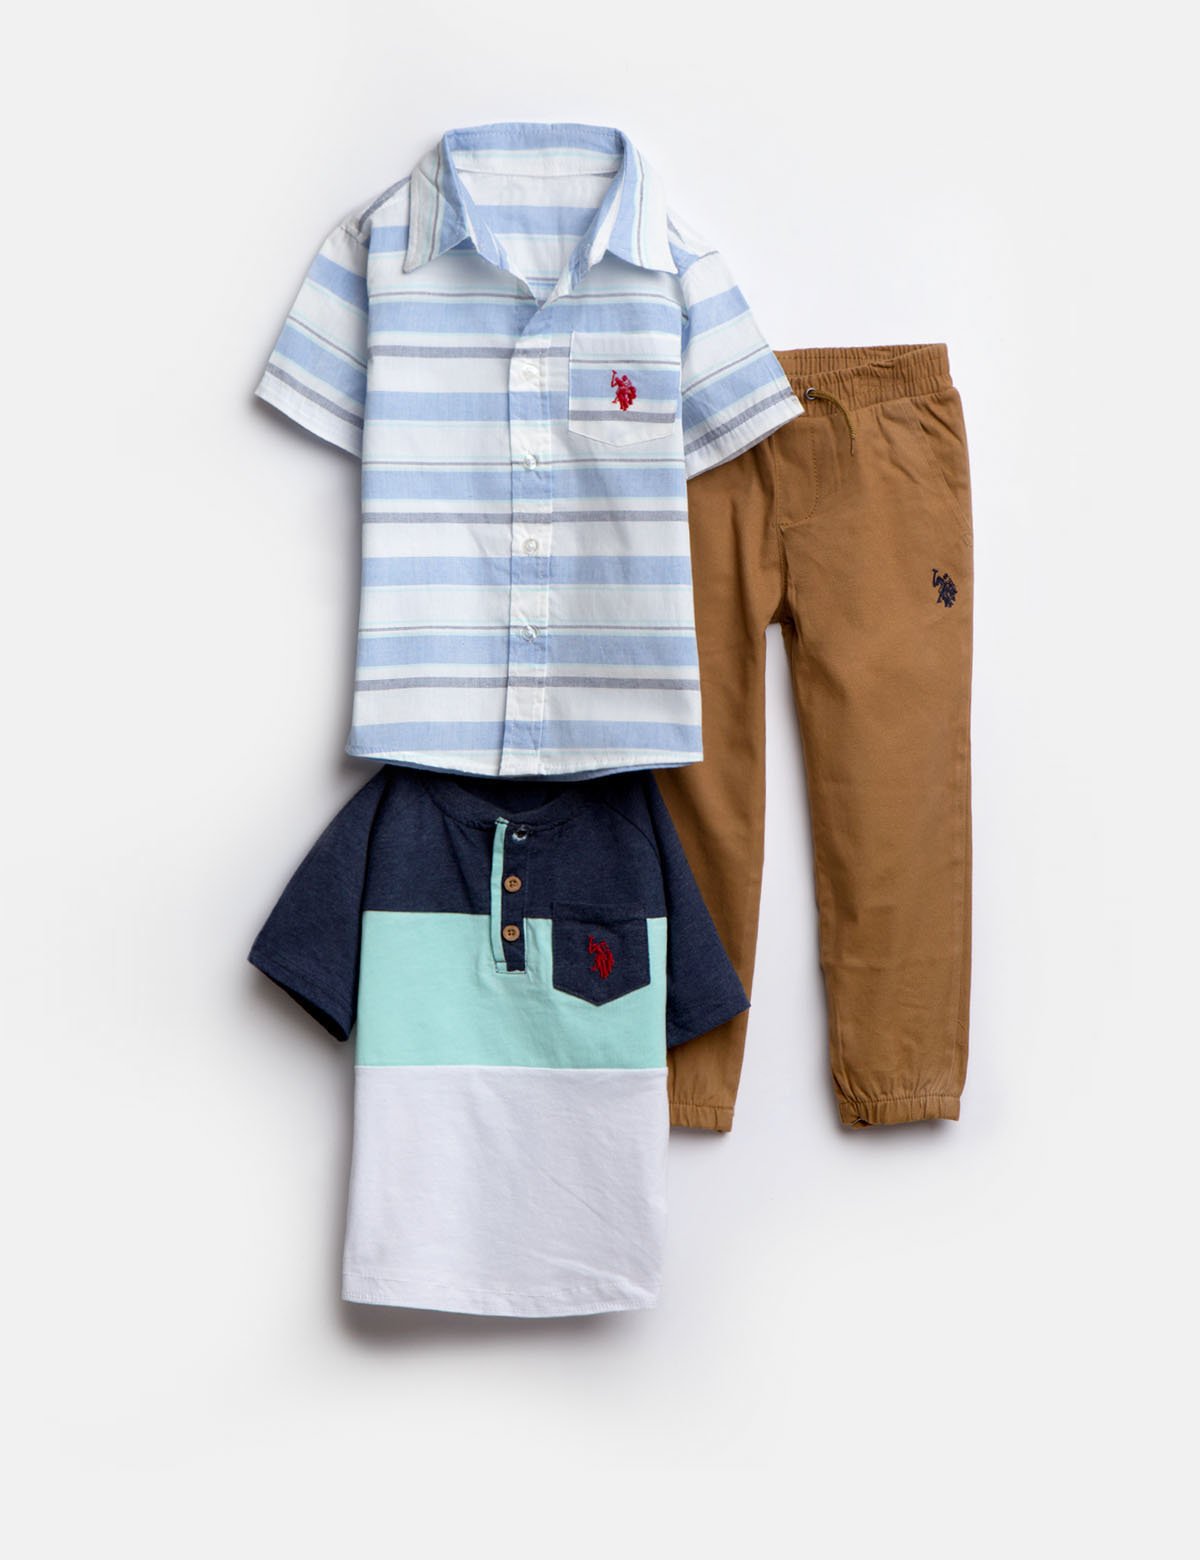 US Polo Assn Toddler Briefs Underwear Cotton Blend Size 2T 3T 2